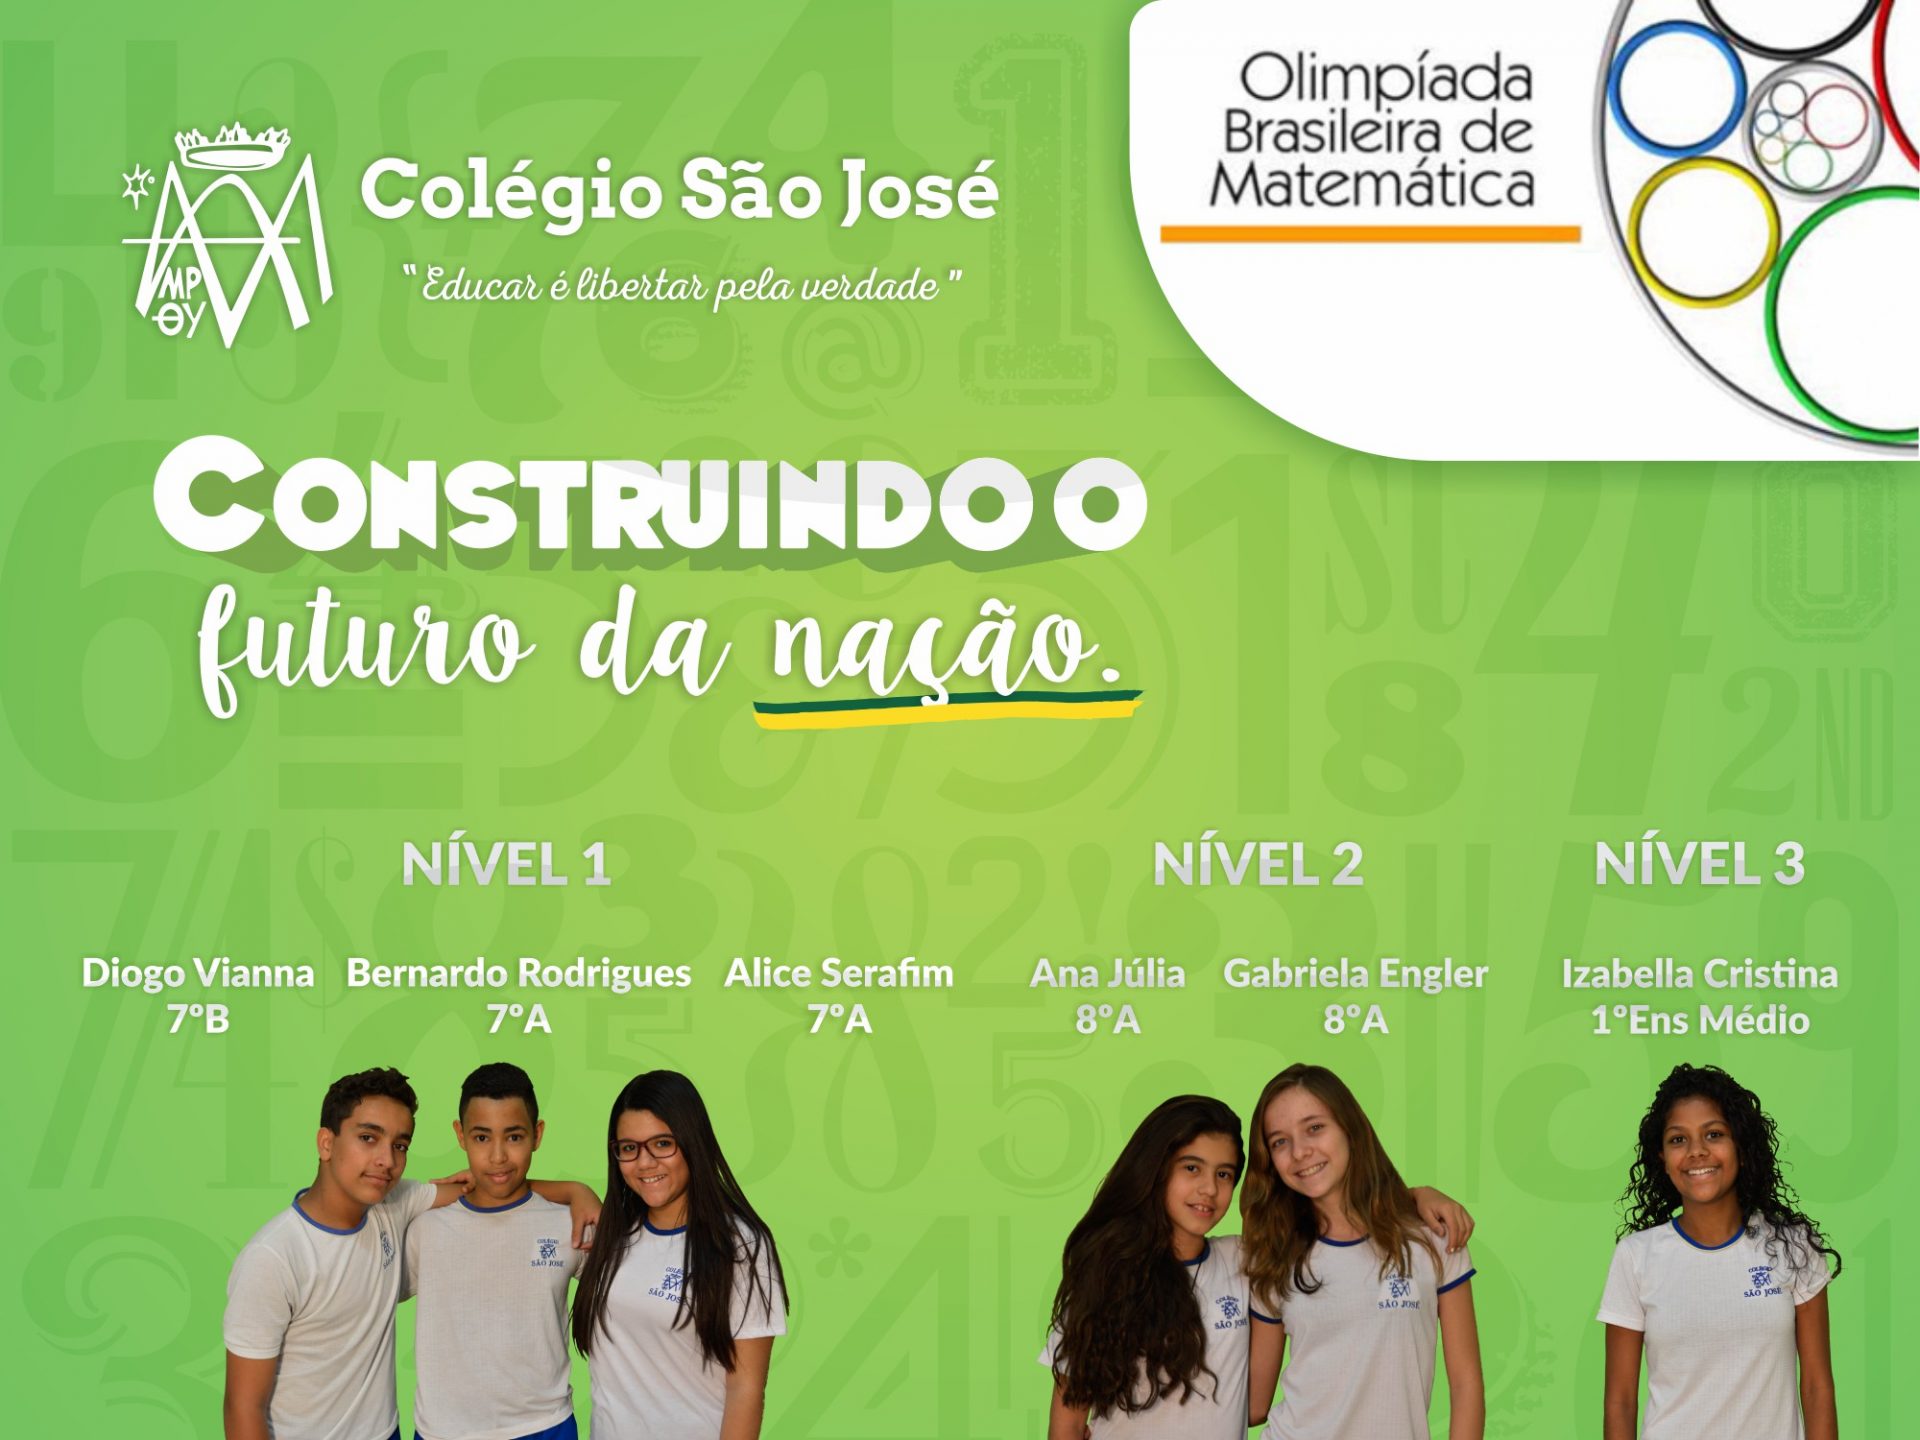 OBM 2016 Olimpí­ada Brasileira de Matemática